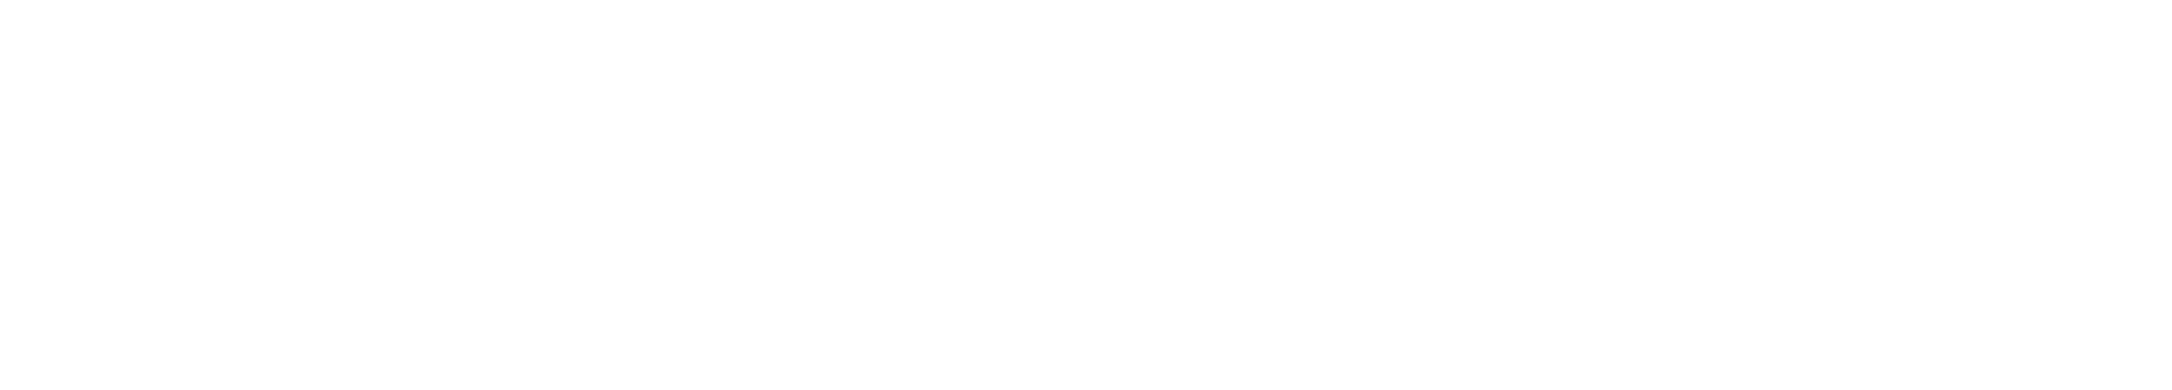 Company logo for 'Vac-Con'.